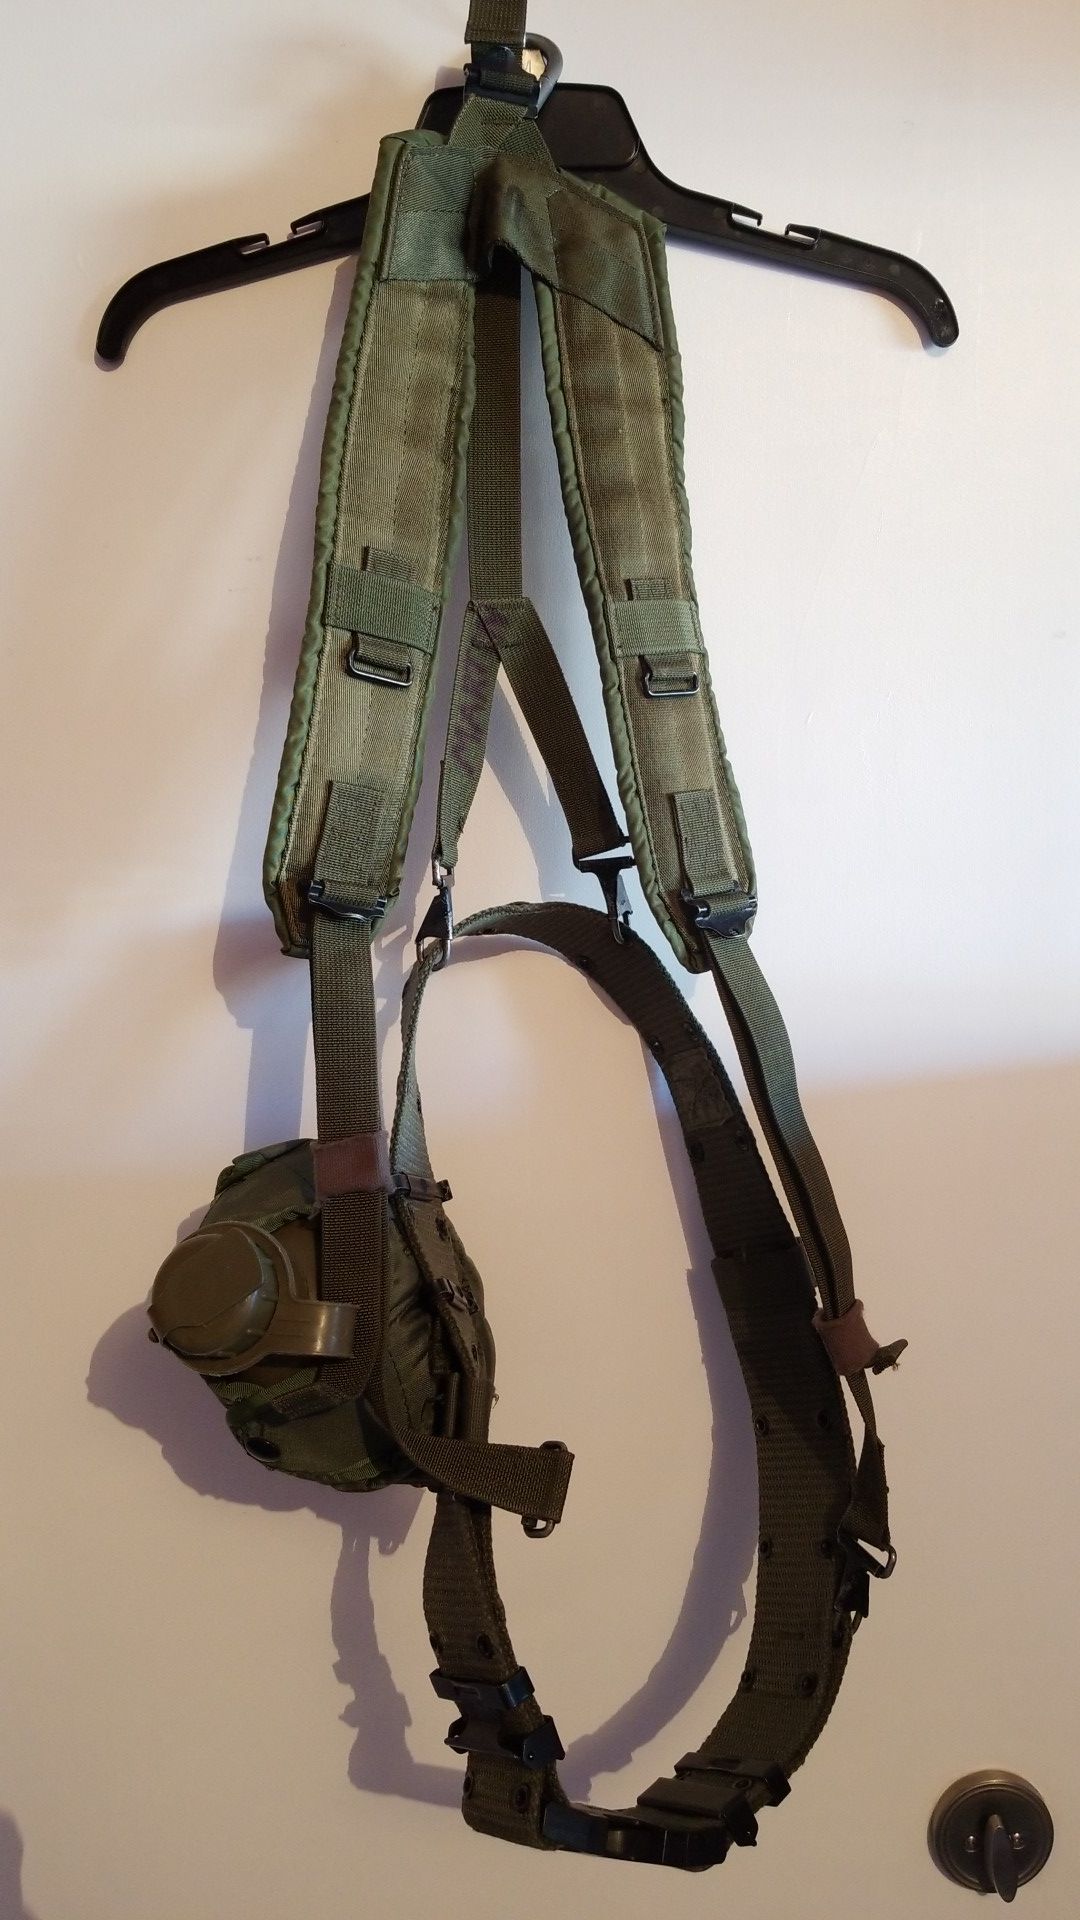 Military web belt and shoulder harness.